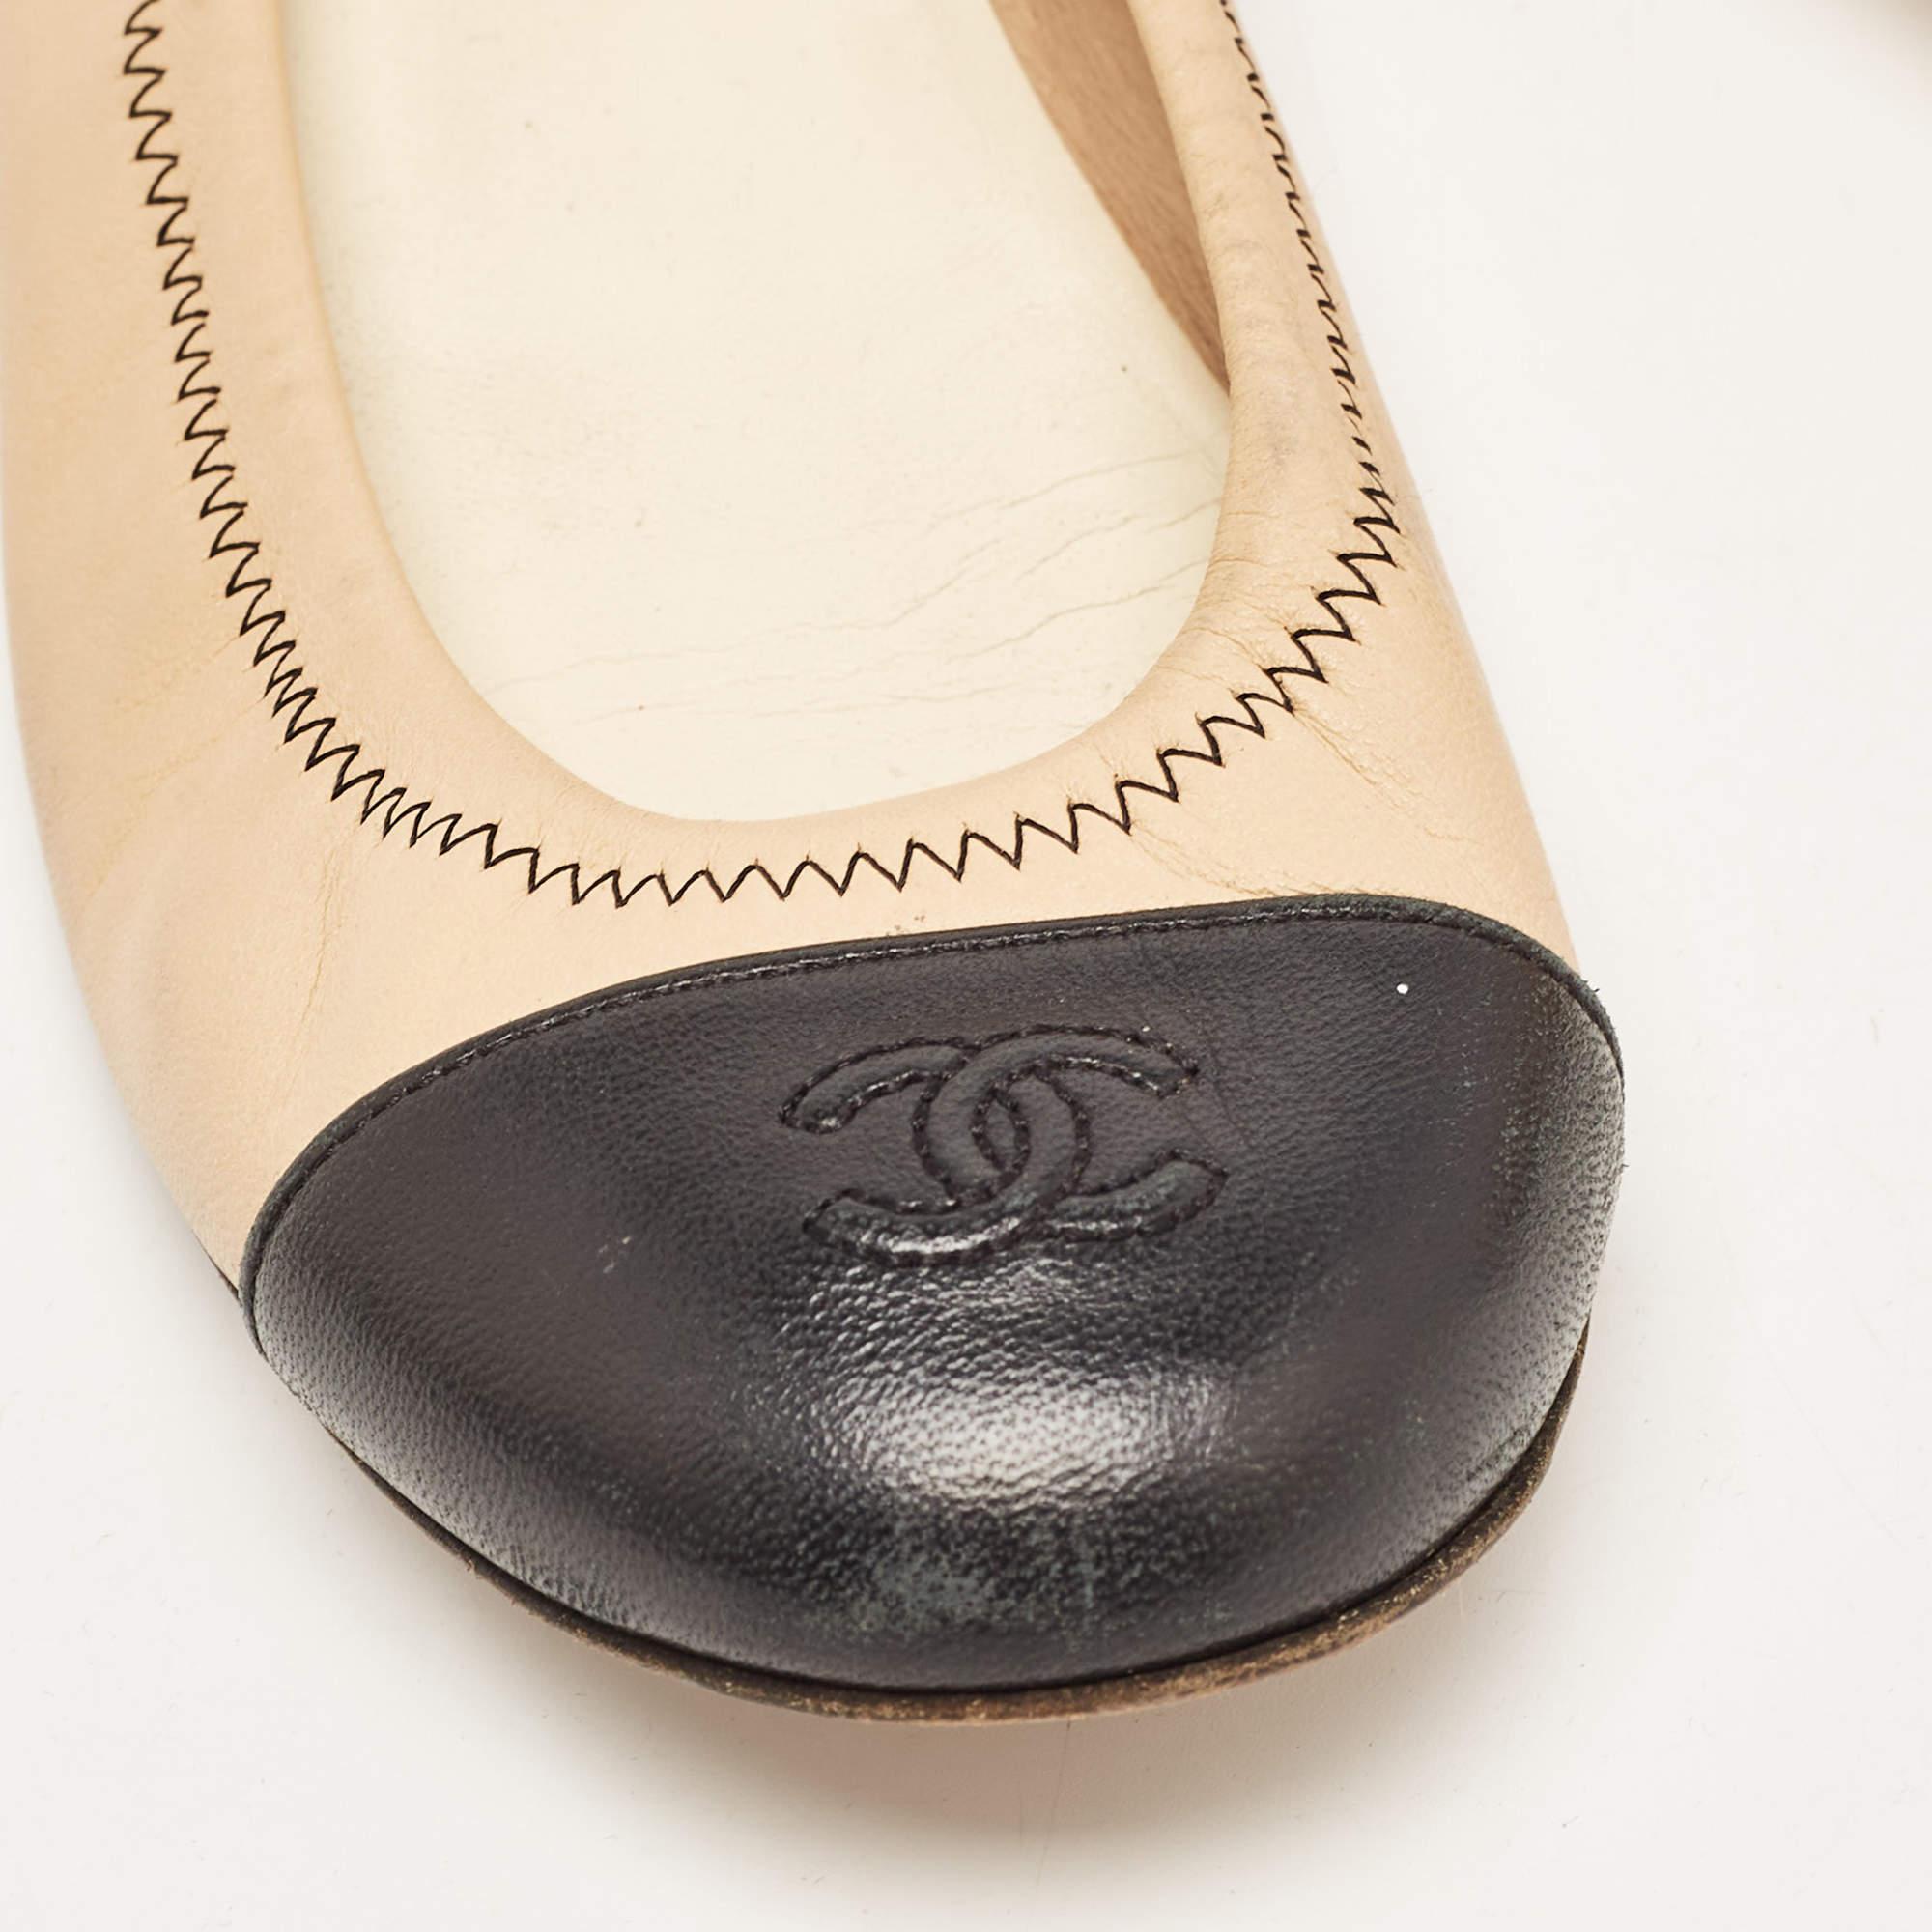 Chanel Beige/Black Leather CC Ballet Flats Size 36.5 For Sale 1